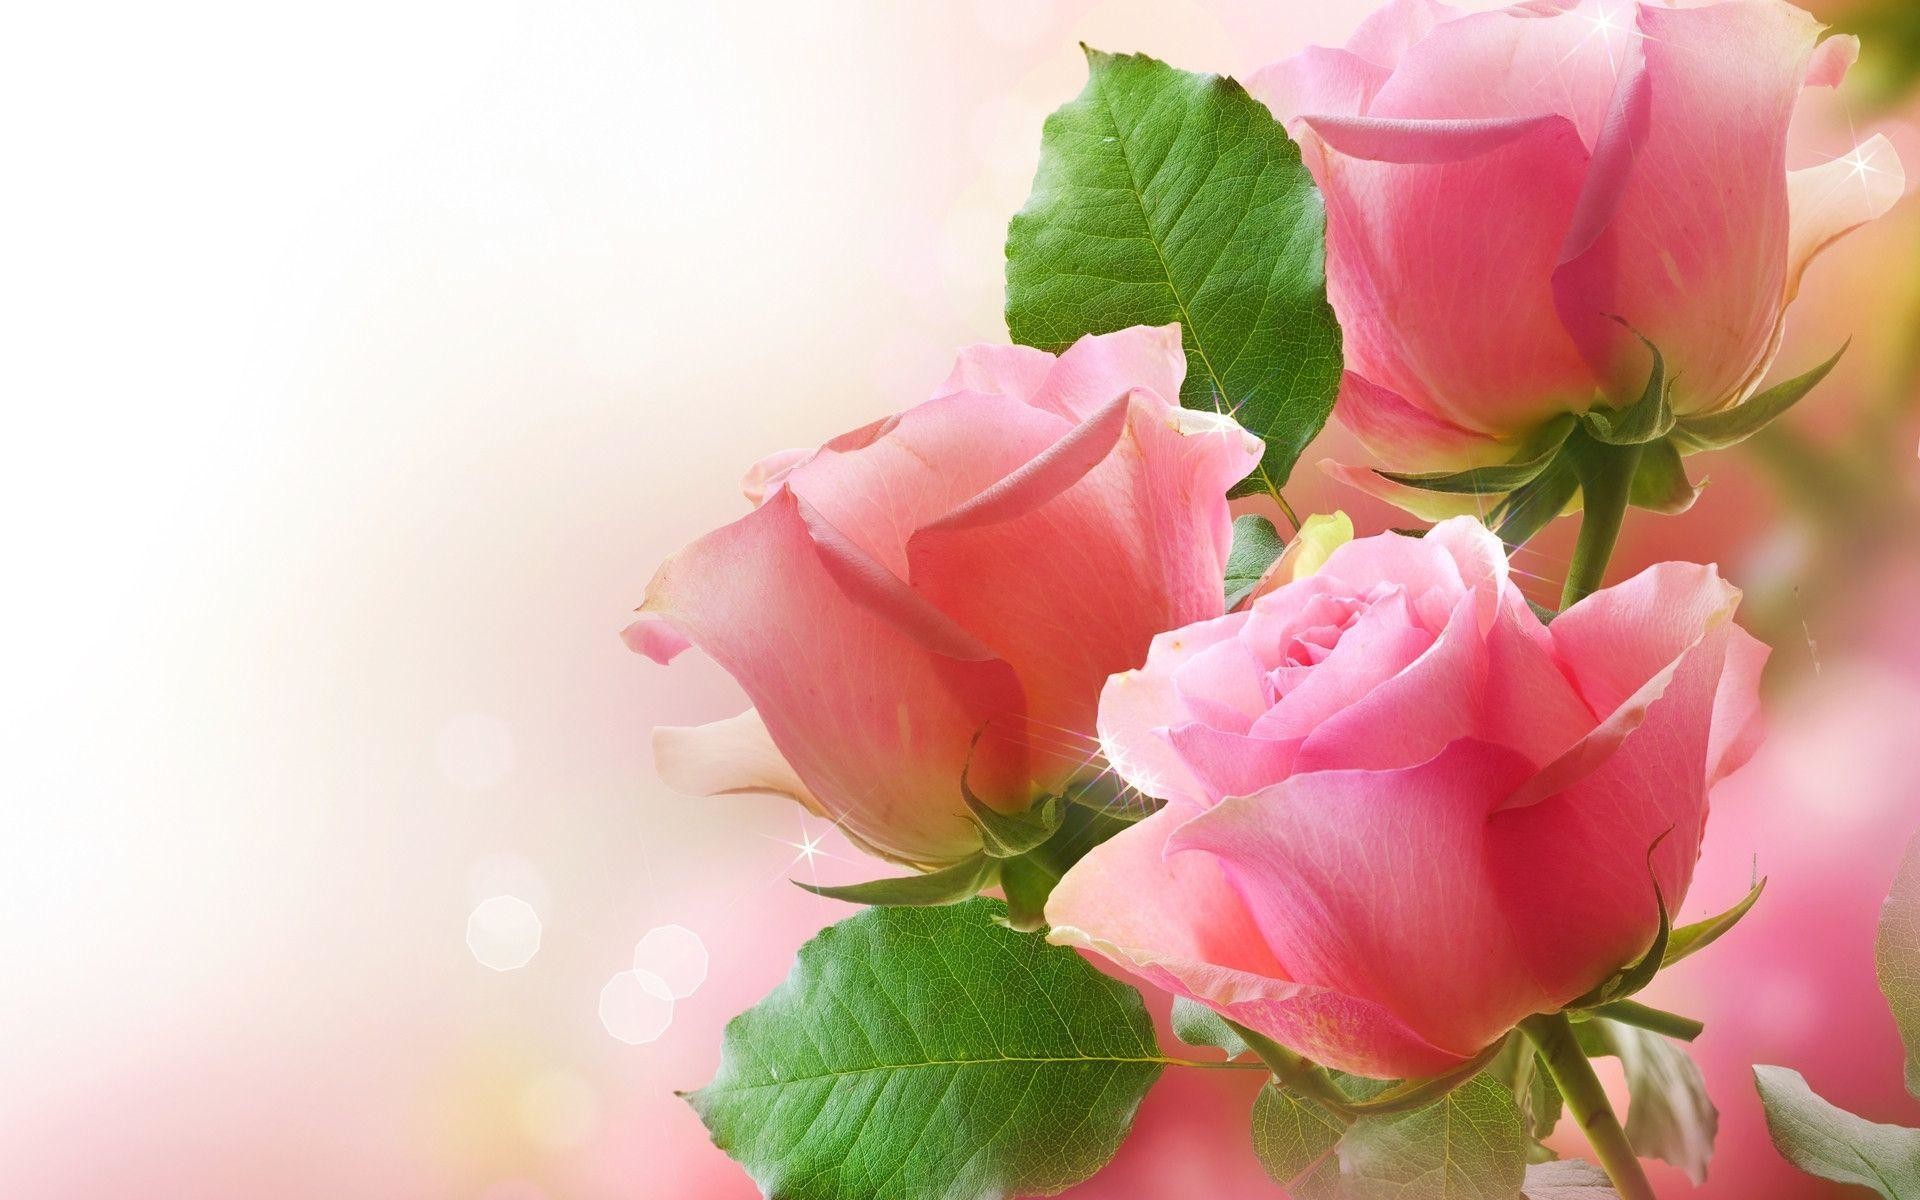 Rose flower blue rain bokeh zoom iPhone X Wallpapers Free Download